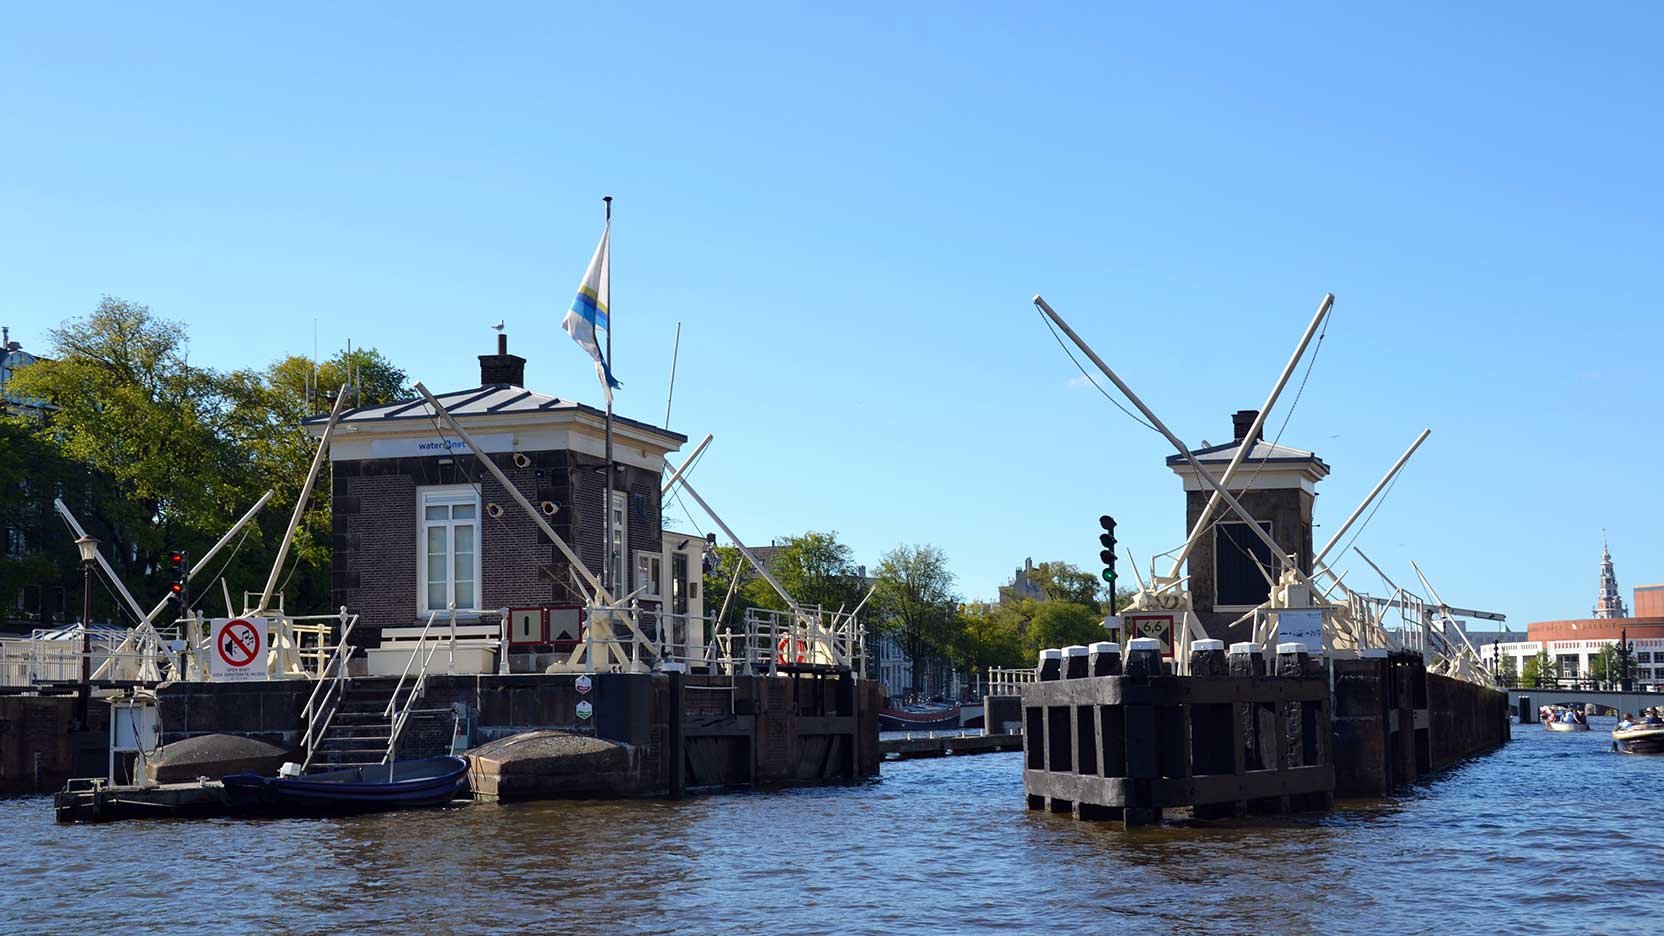 Amstel Locks, Amsterdam